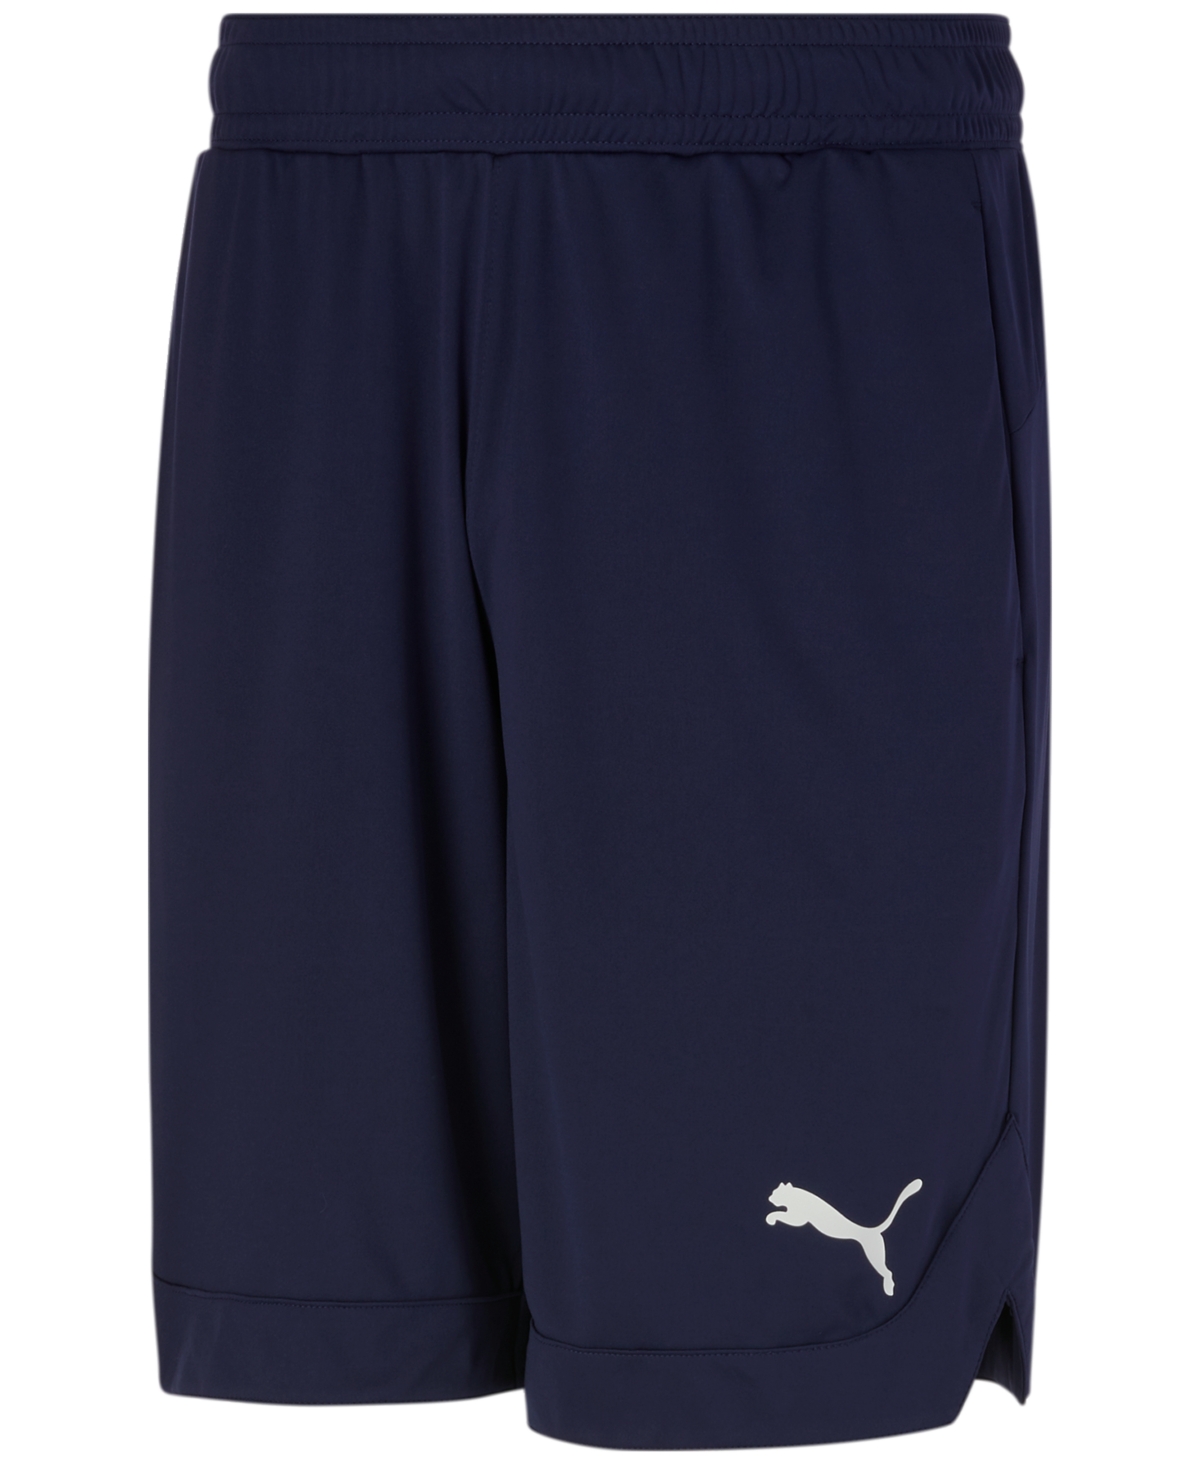 Men's dryCELL 10" Basketball Shorts - Racing Blue/Puma White